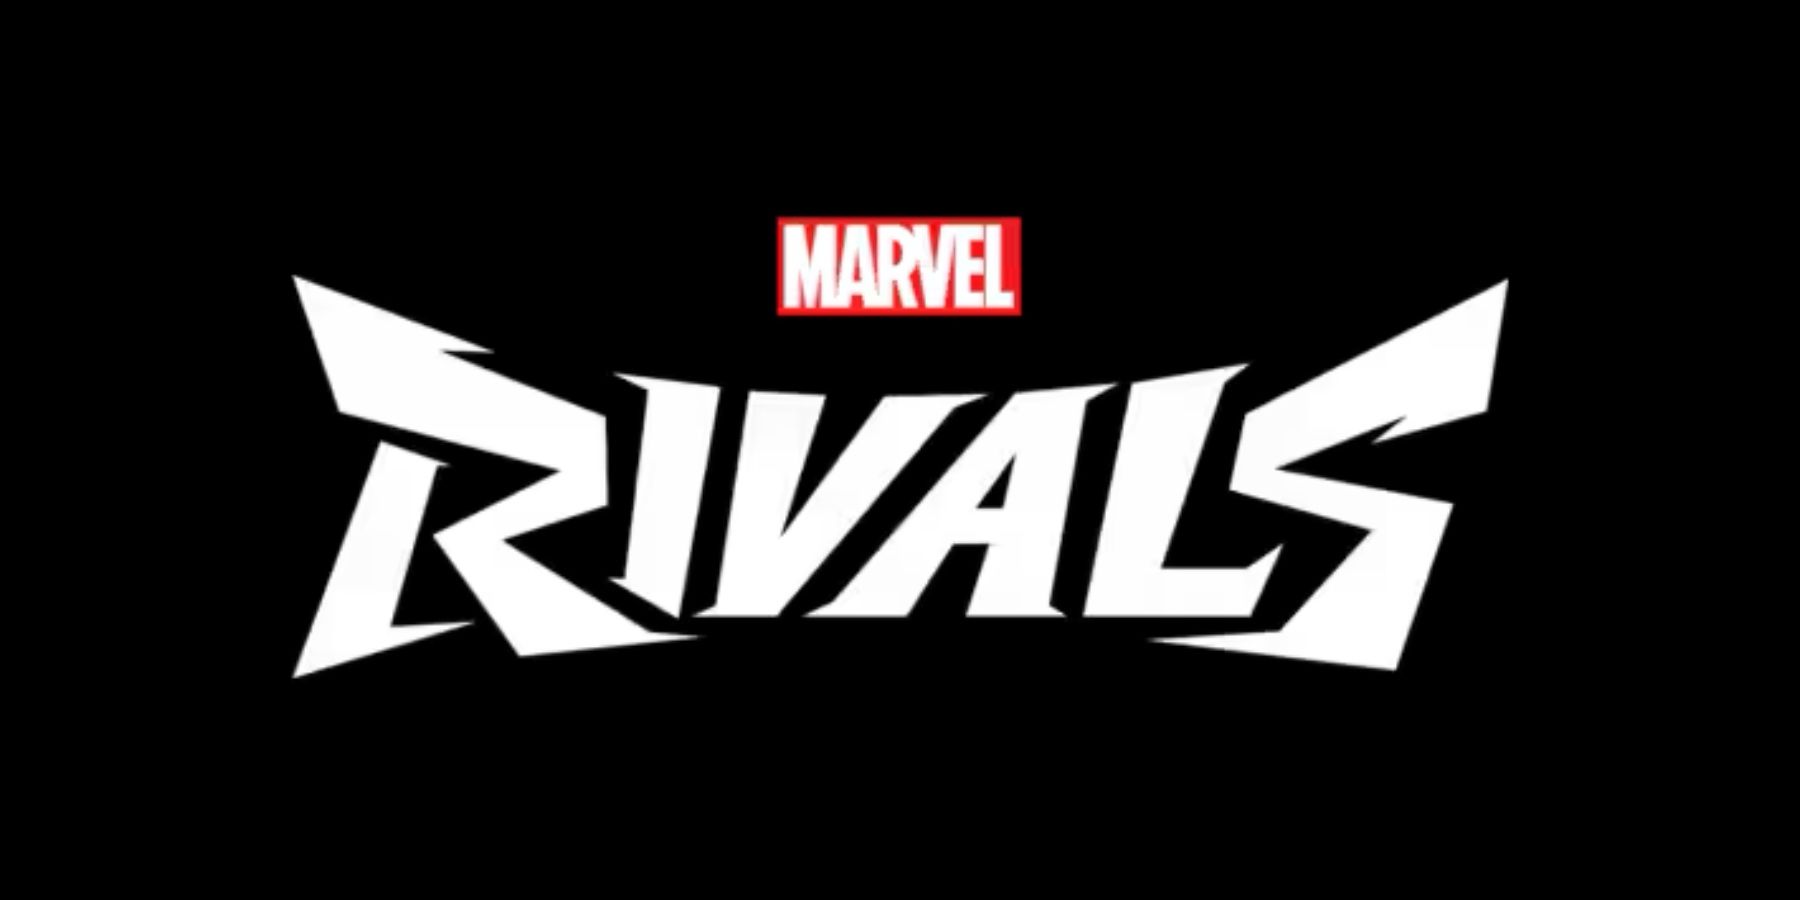 marvel-rivals-logo-black-background